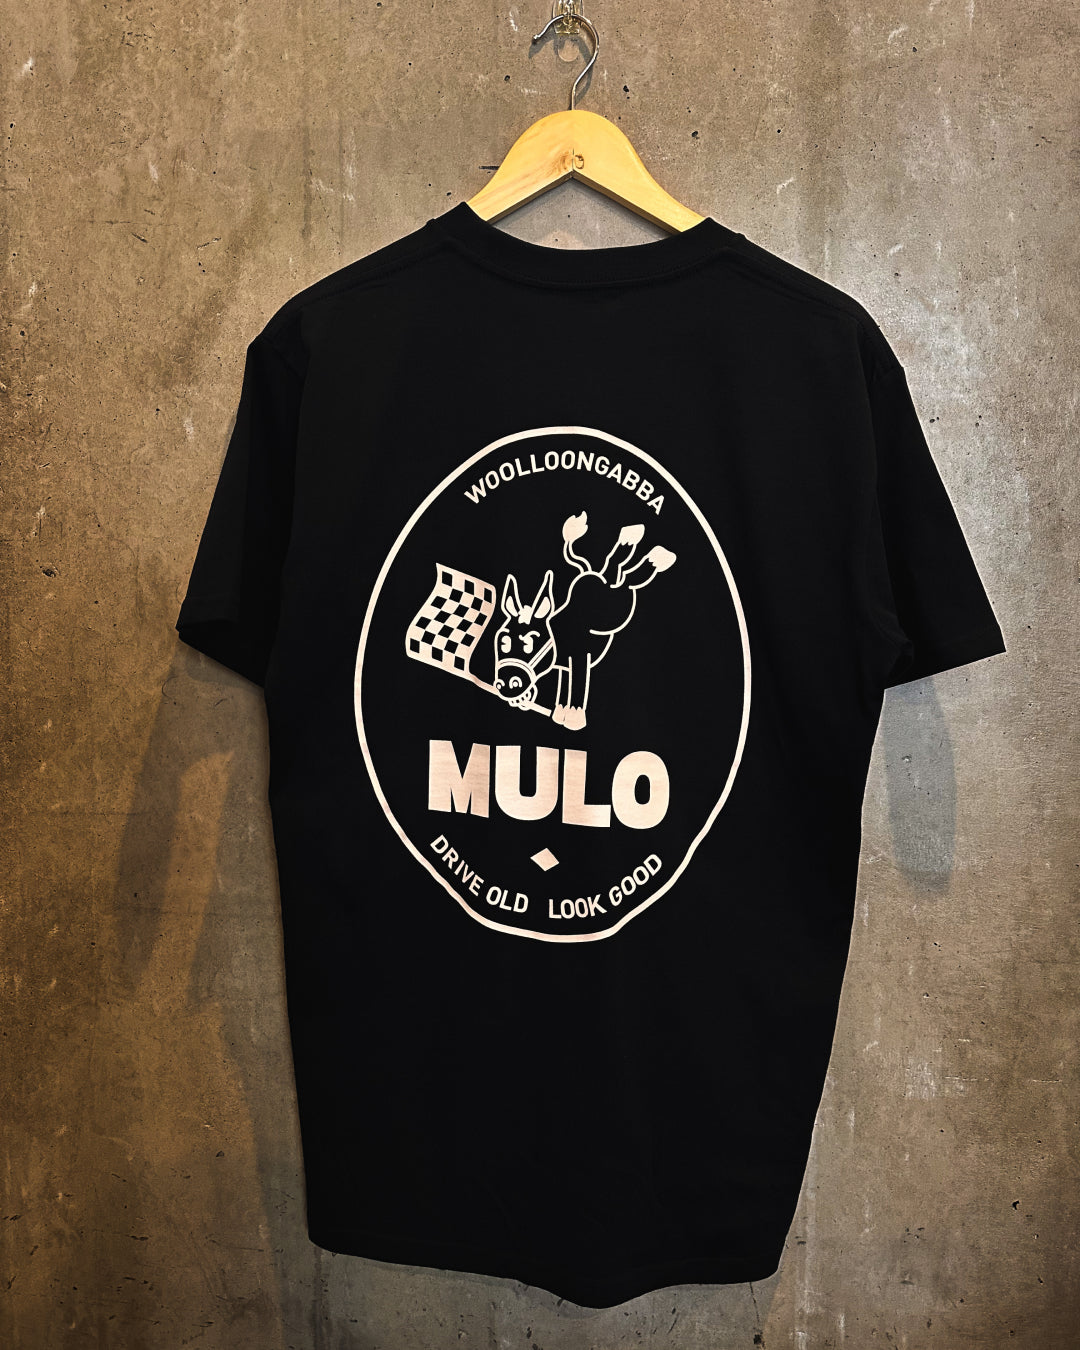 MULO Tipo 03 Tee Shirt Black